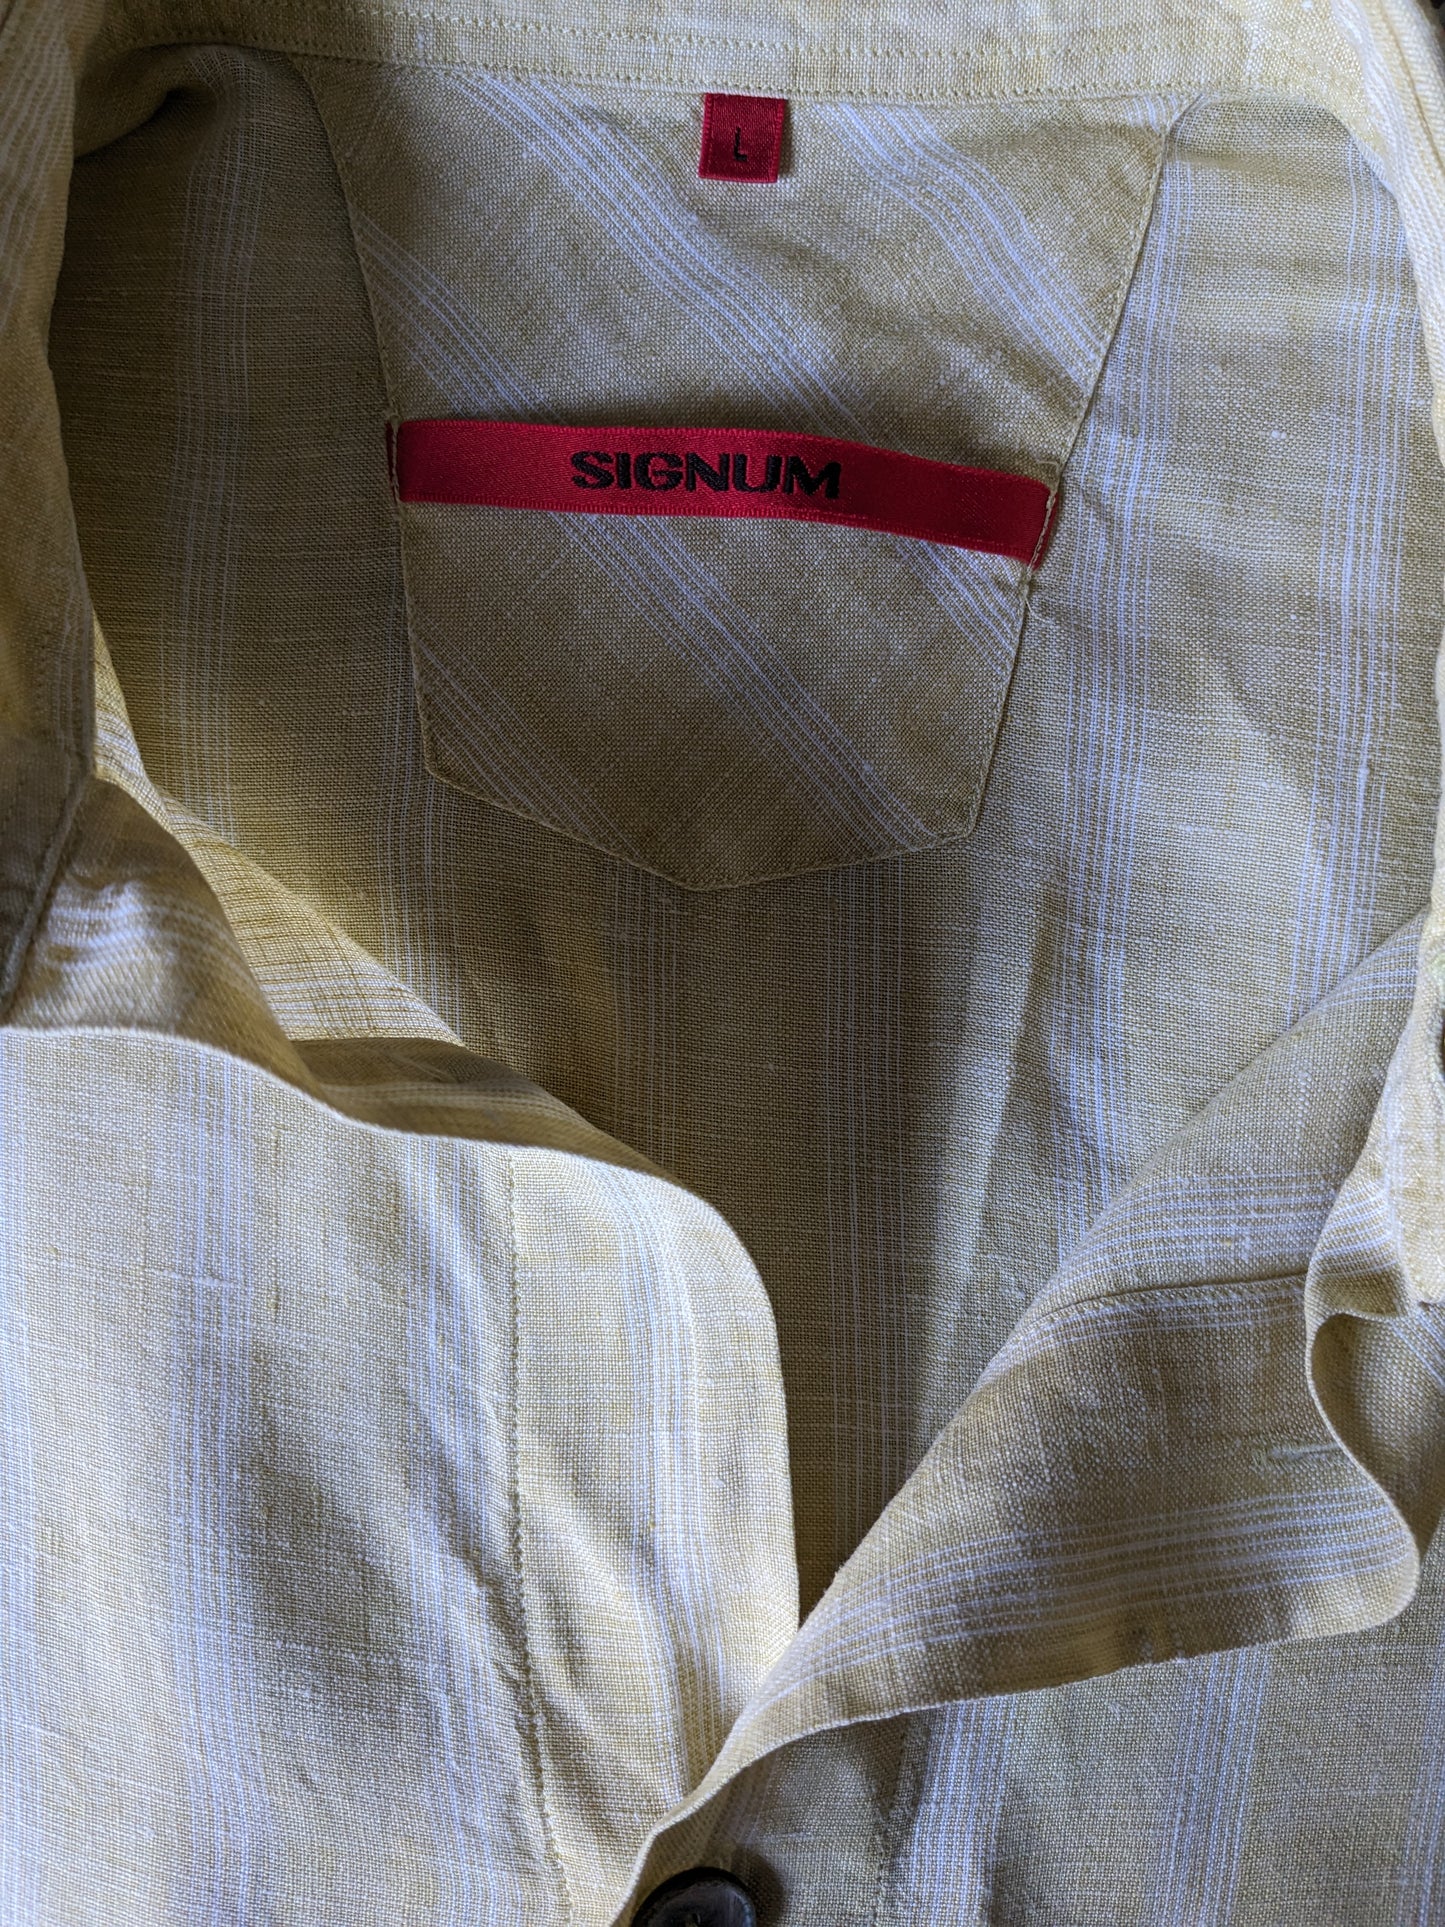 Vintage linen signum shirt short sleeve. Larger buttons. White yellow checkered. Size L / XL.